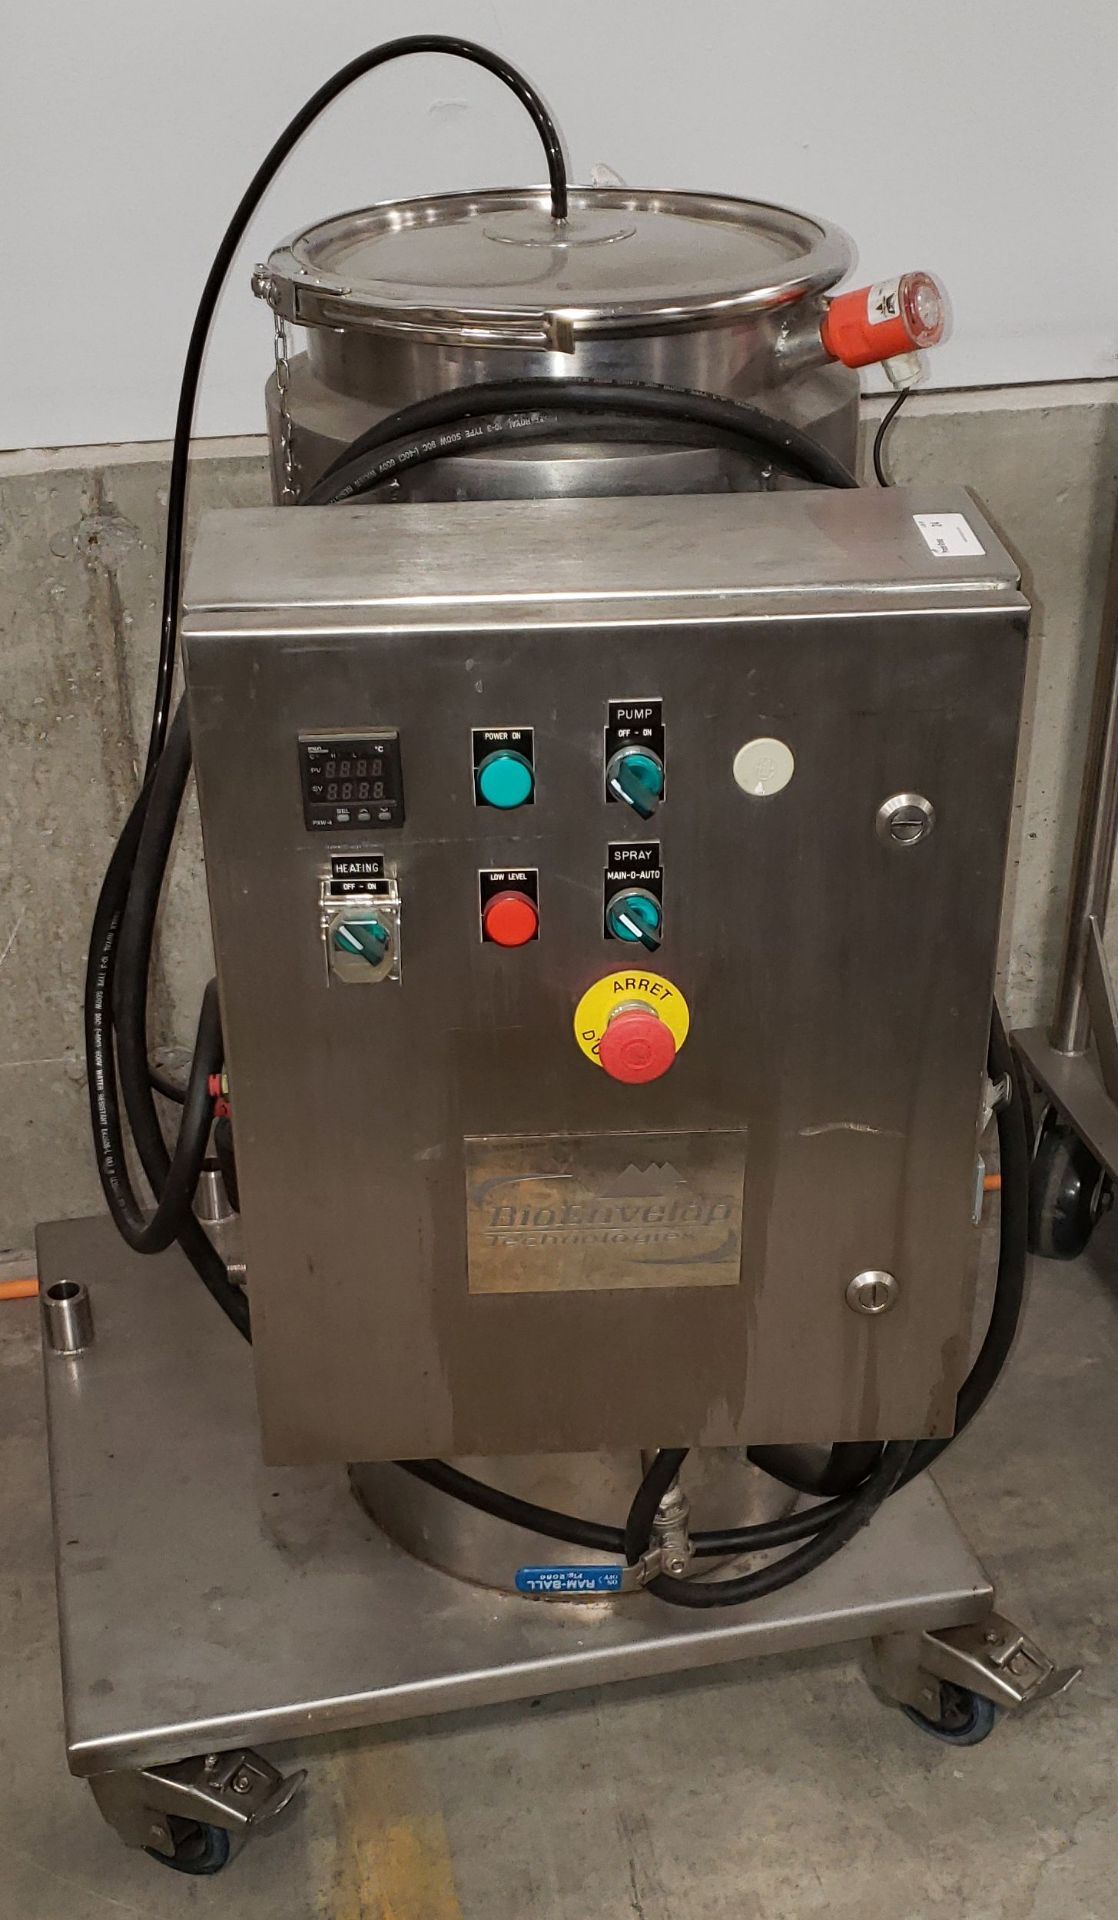 Heating Spray Pump-Bio Envelope Technologies Stainless Steel Tank on Cart with Internal Heating